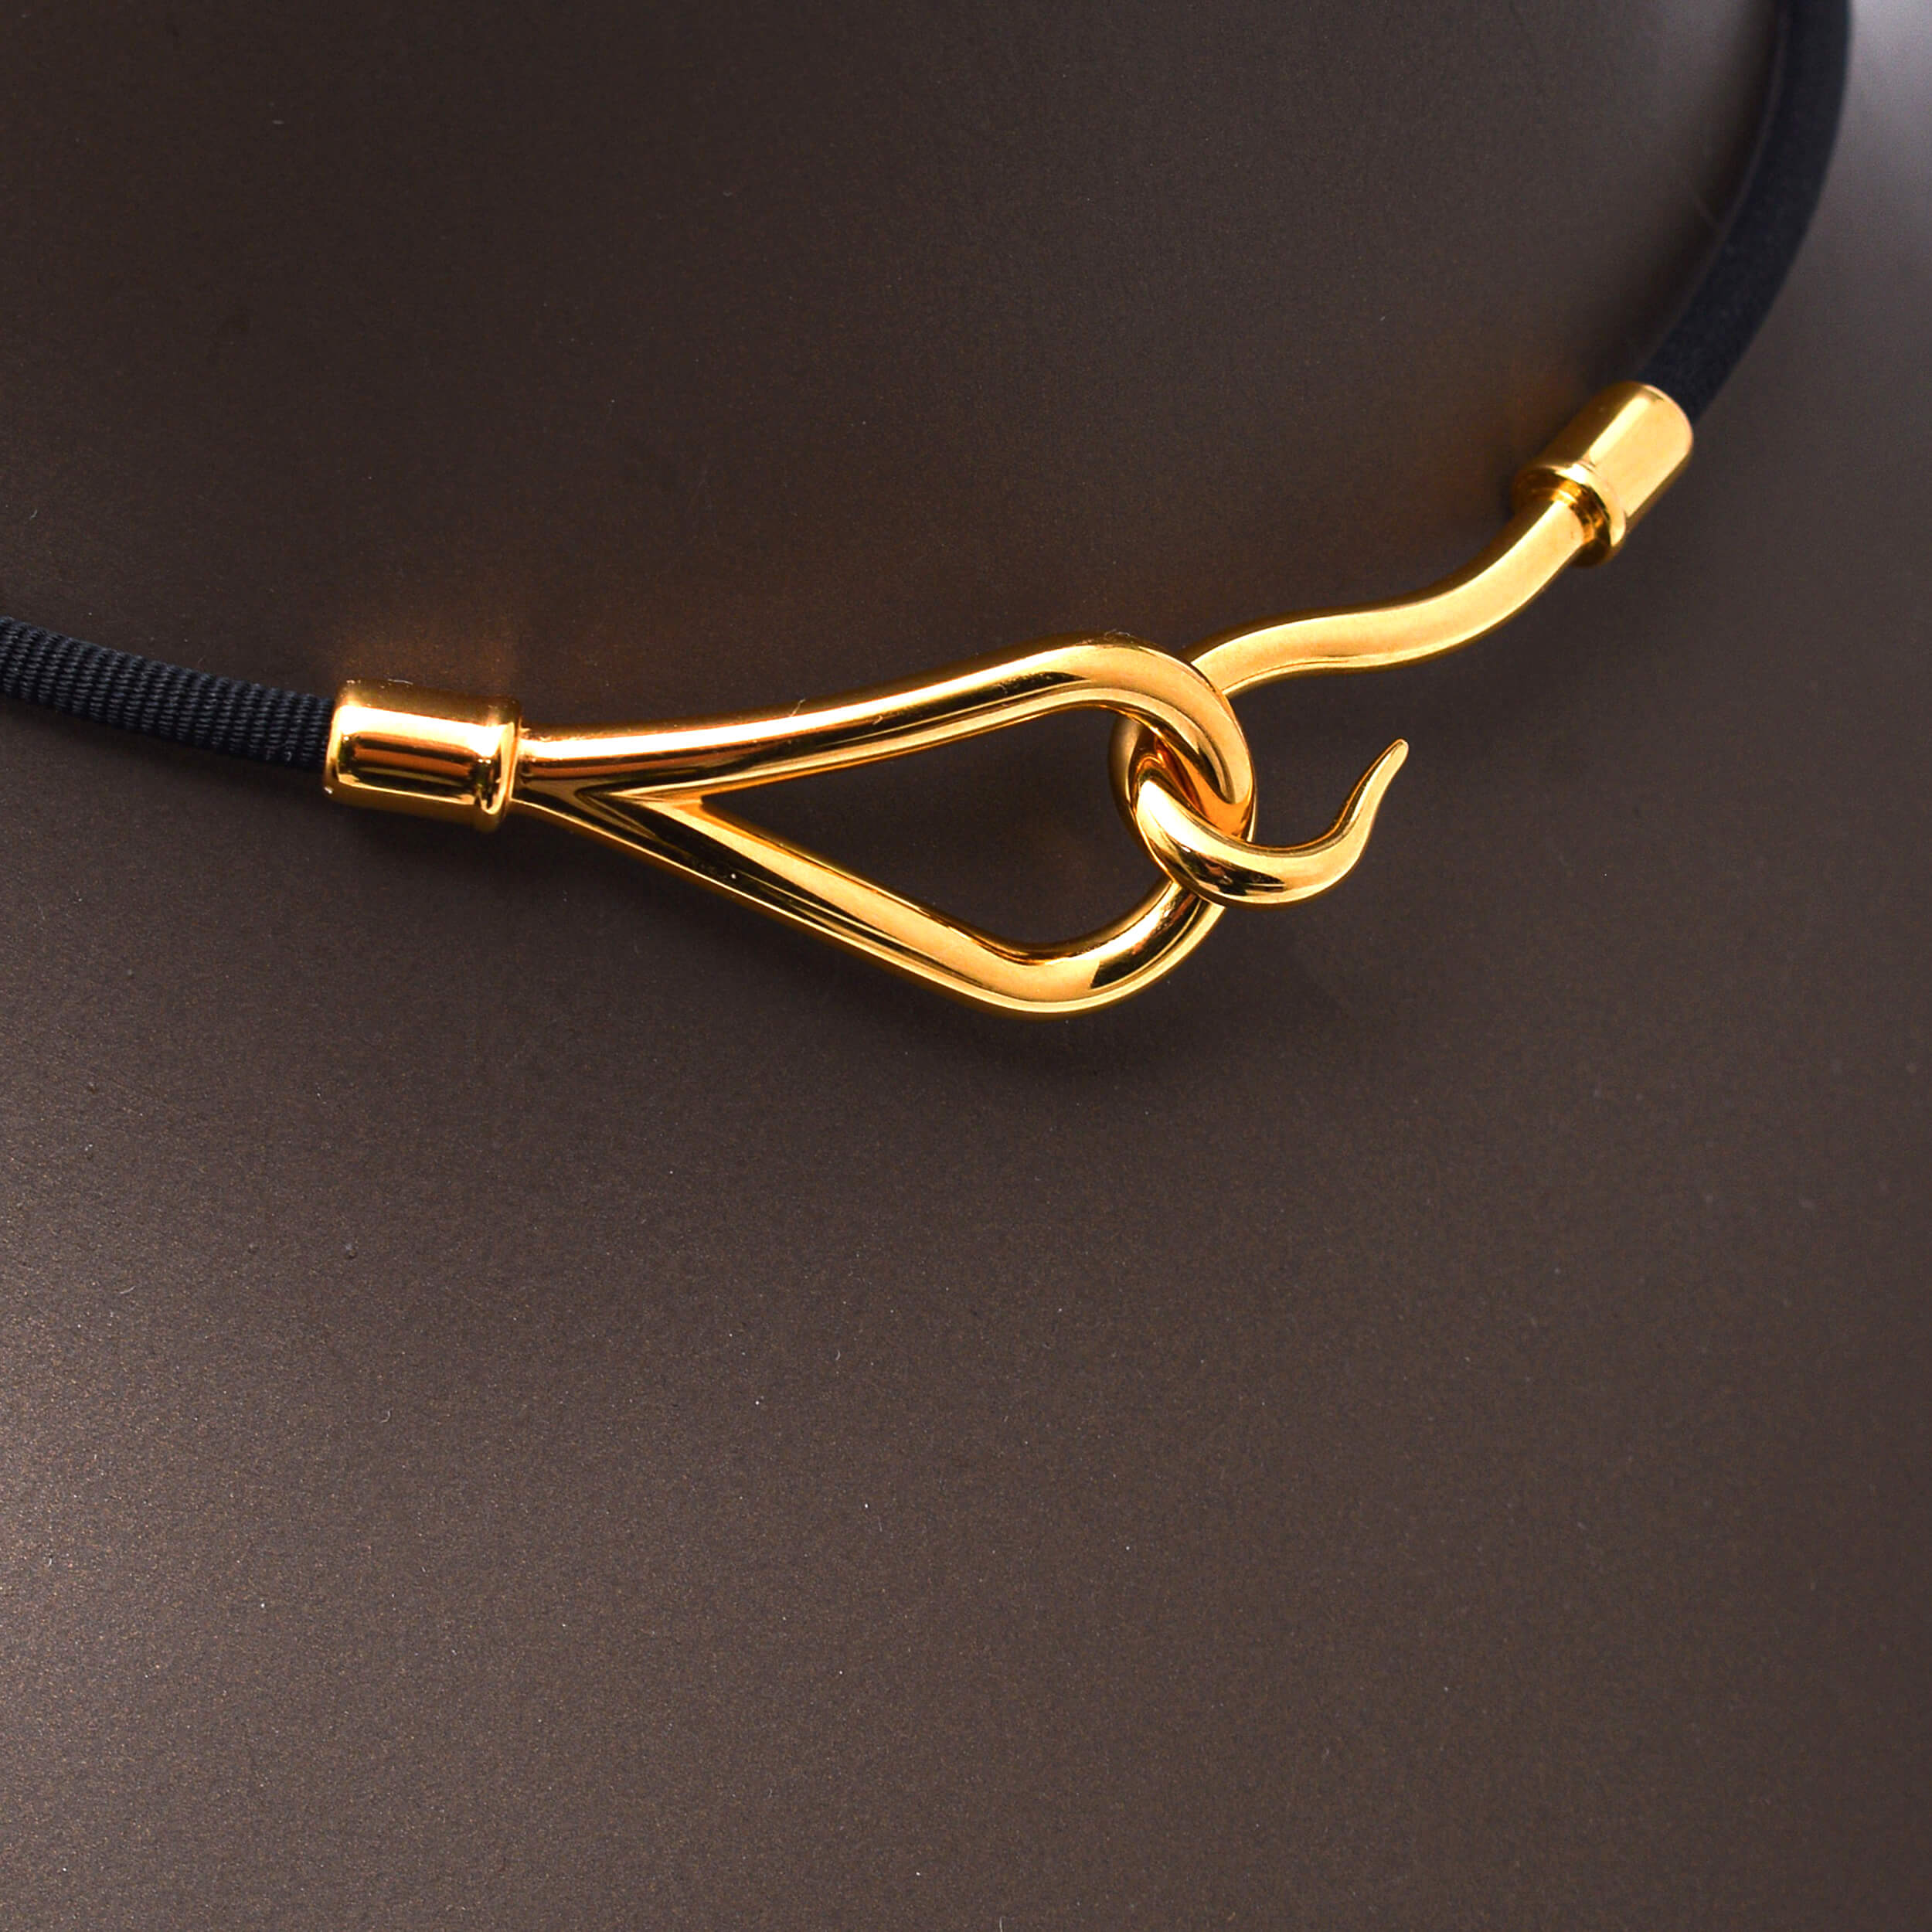 Hermes - Gold&Black Bridle Jumbo Hook Choker Necklace